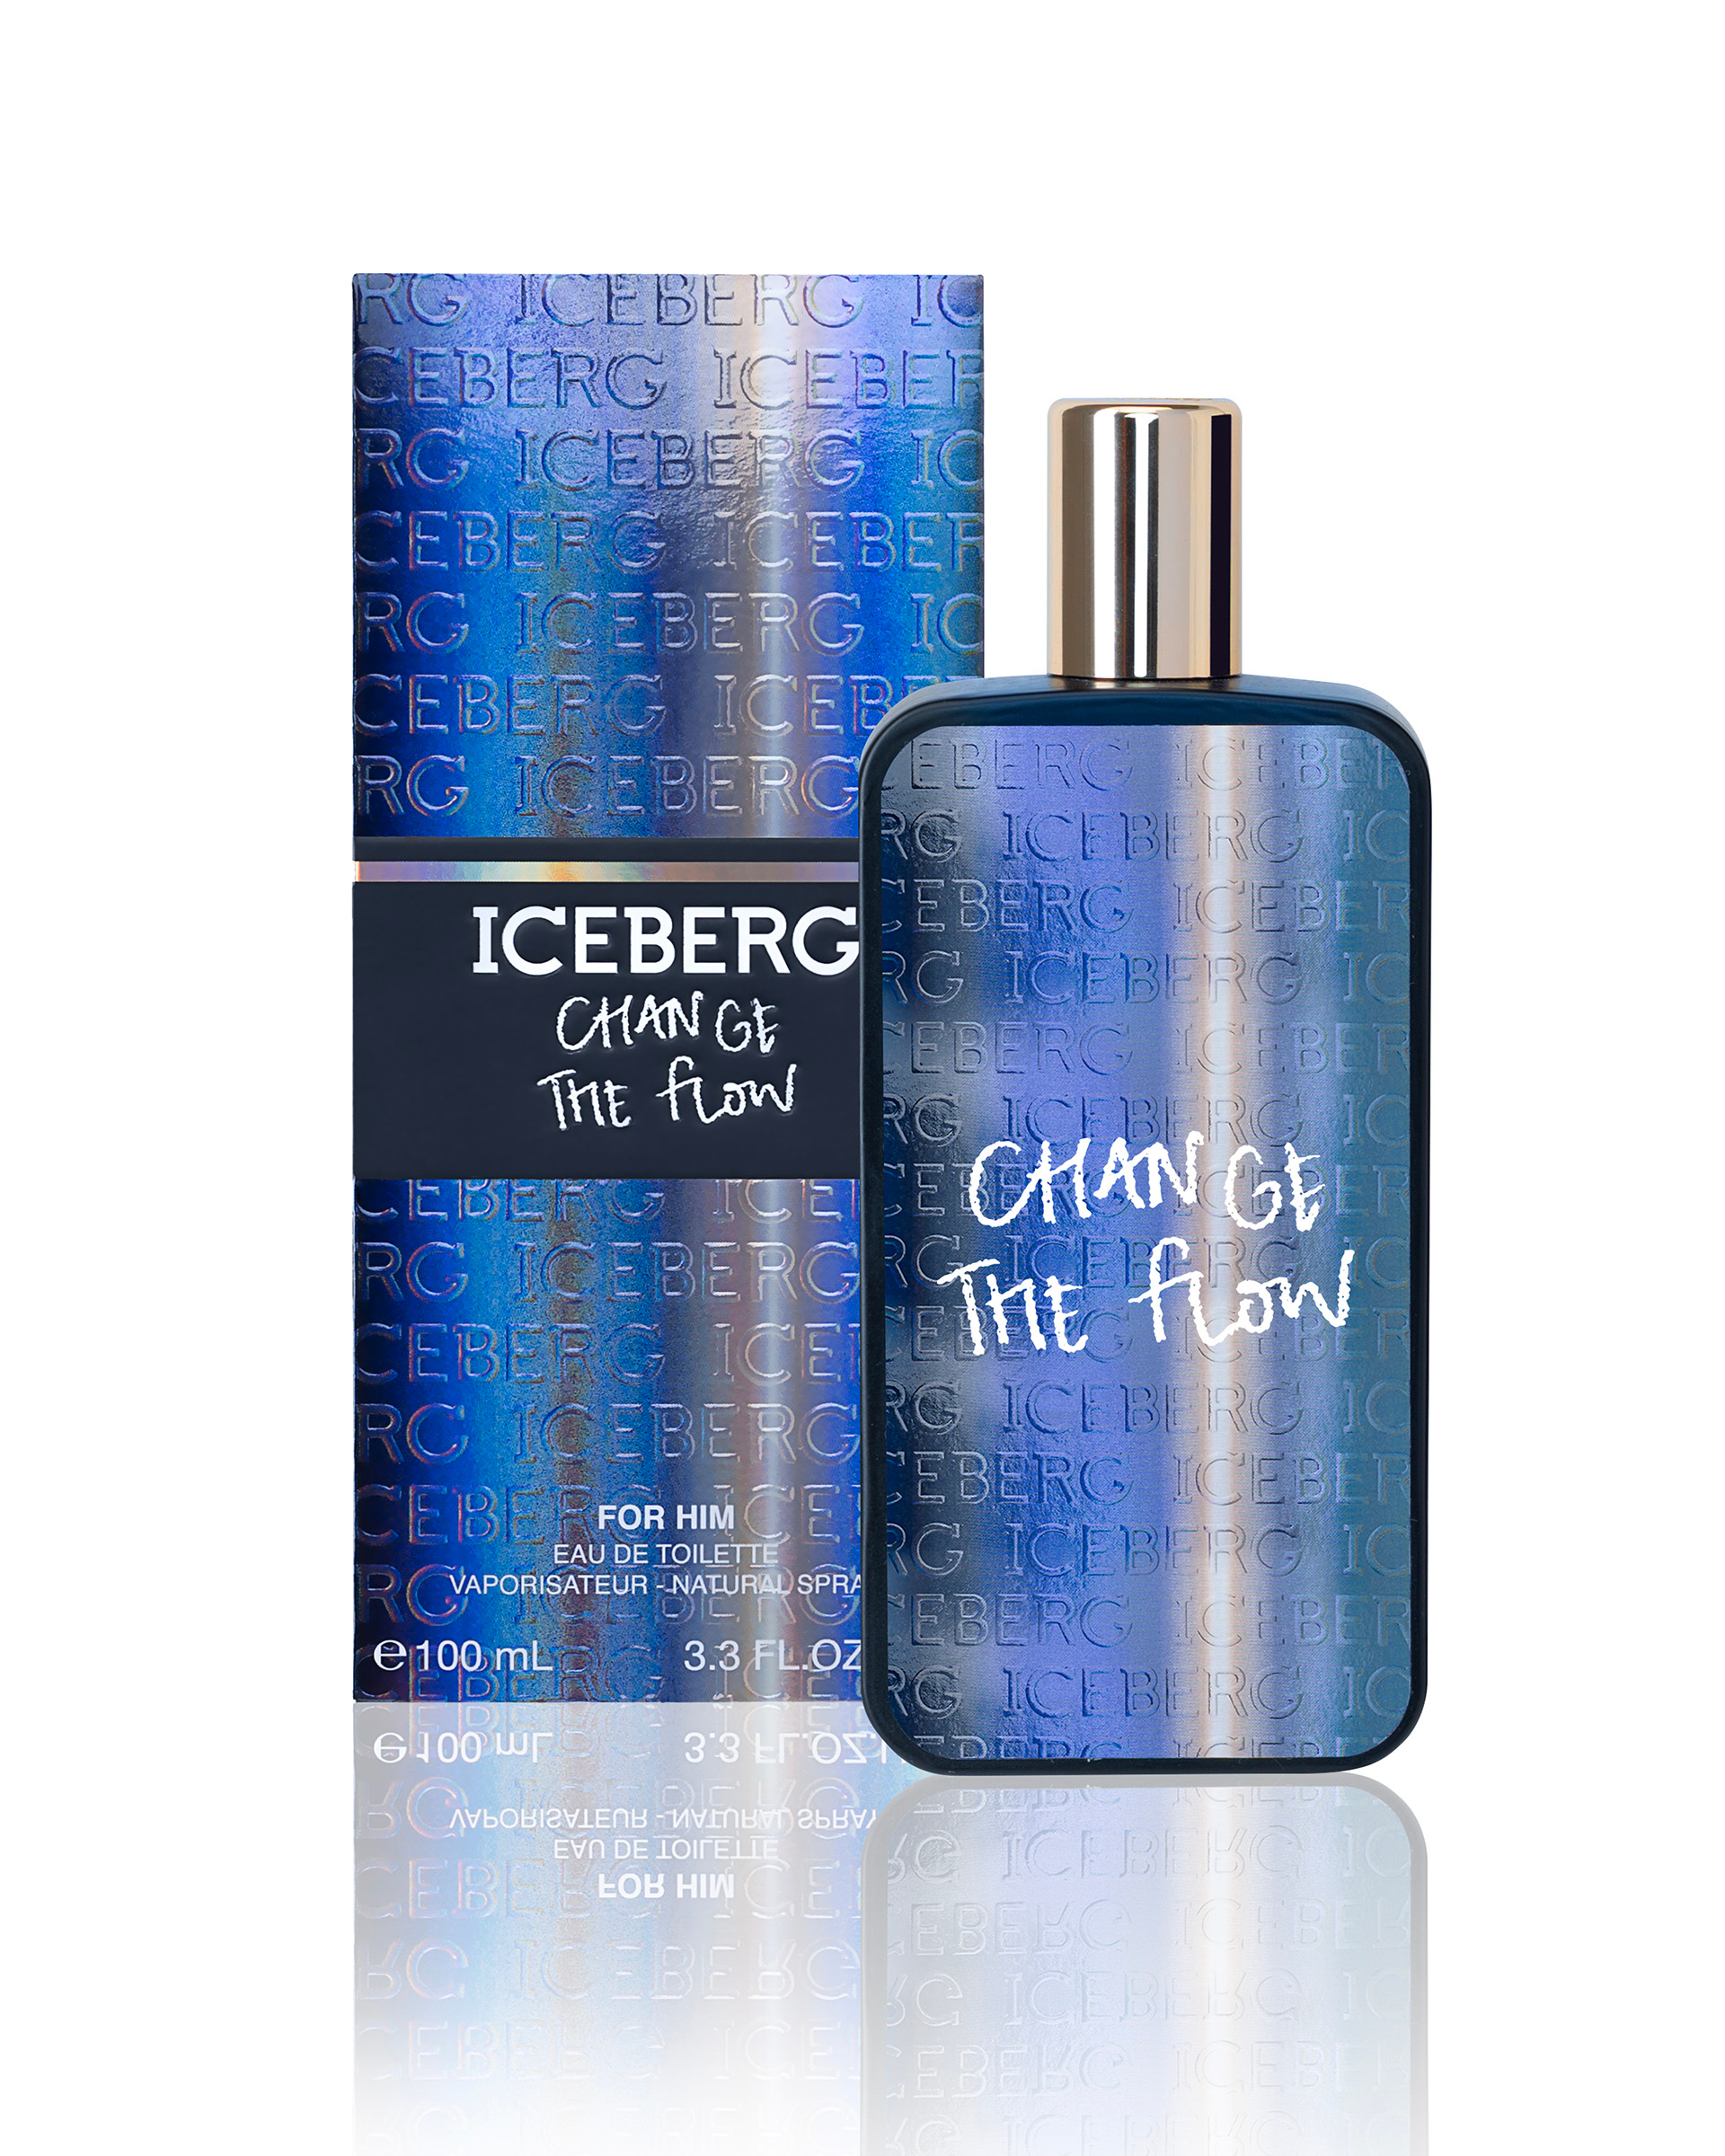 The CHANGE THE FLOW | Iceberg fragrance